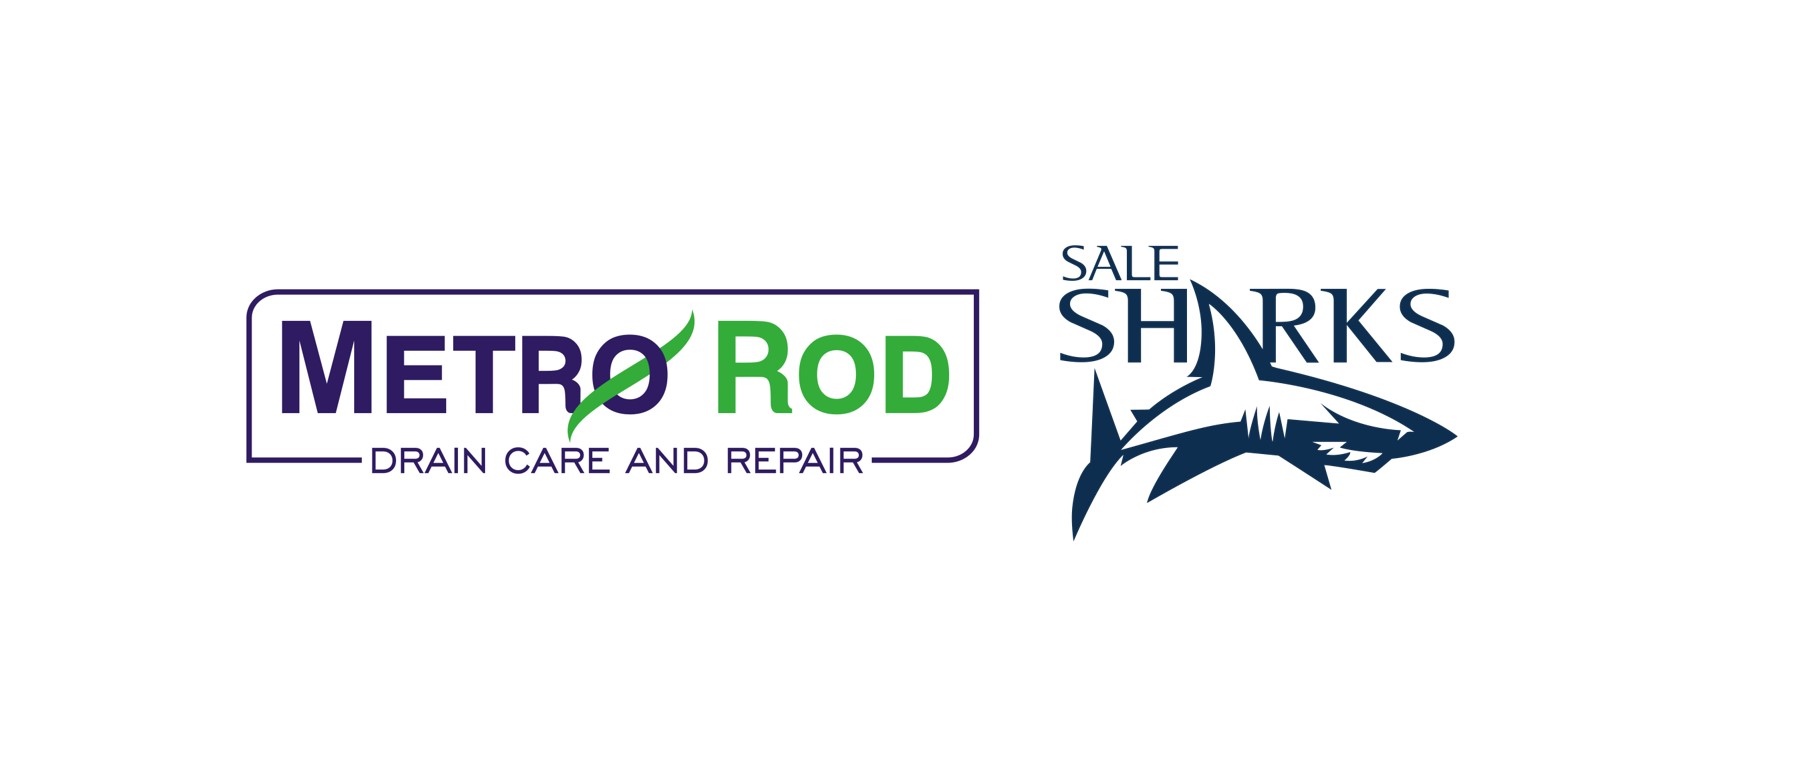 Sale Sharks Sponsorship – Metro Rod Manchester – 10% Off!